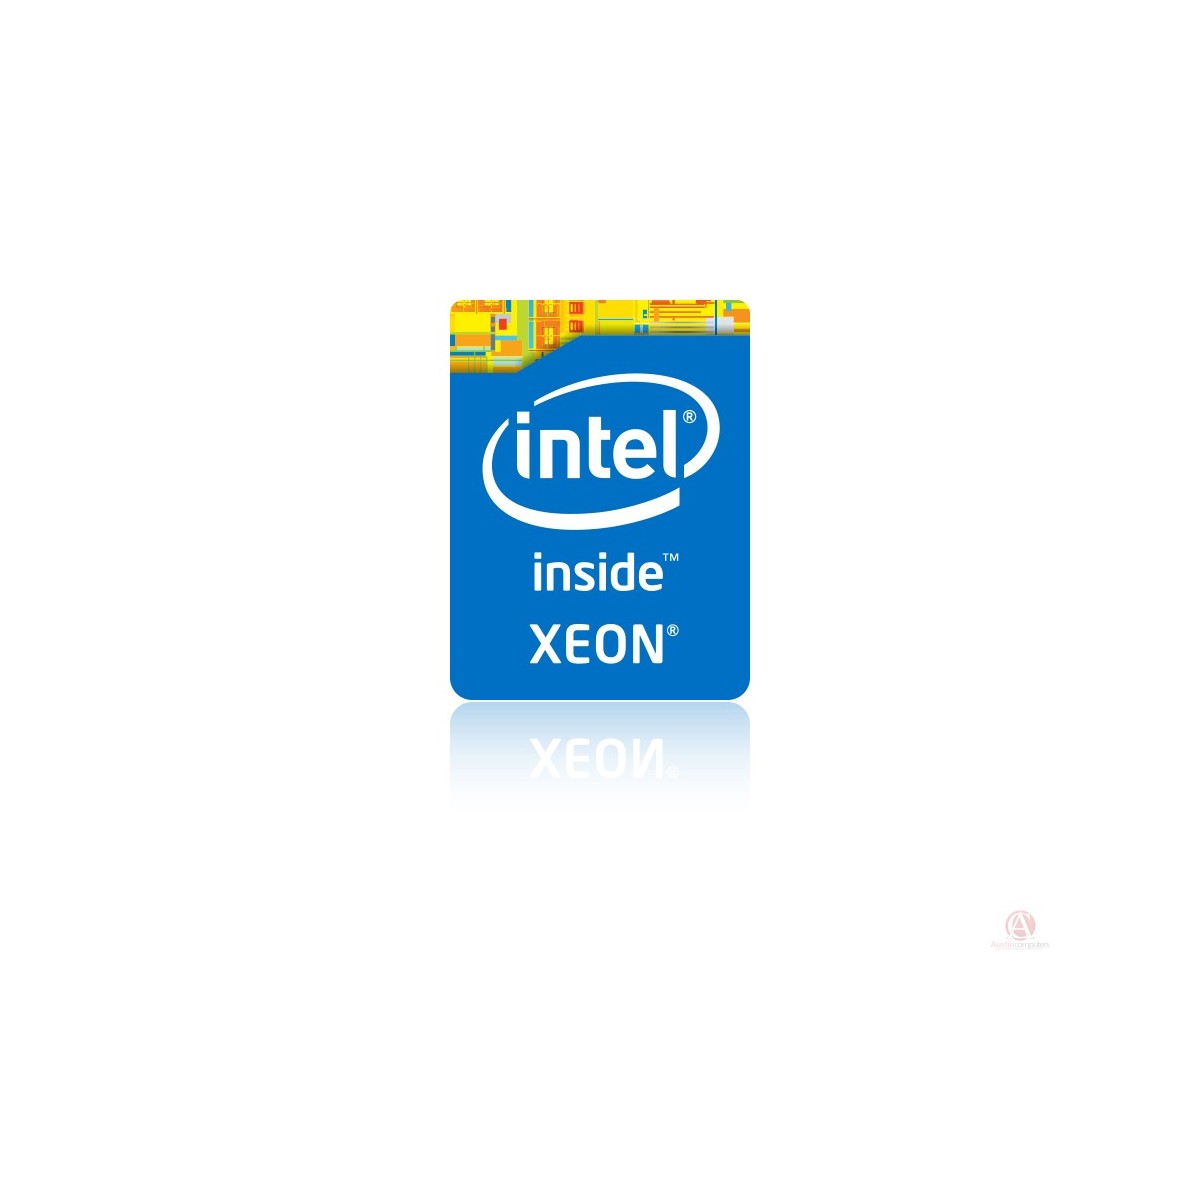 Intel Xeon E3-1275V3 Xeon E3 3.5 GHz - Skt 1150 Haswell 22 nm - 84 W